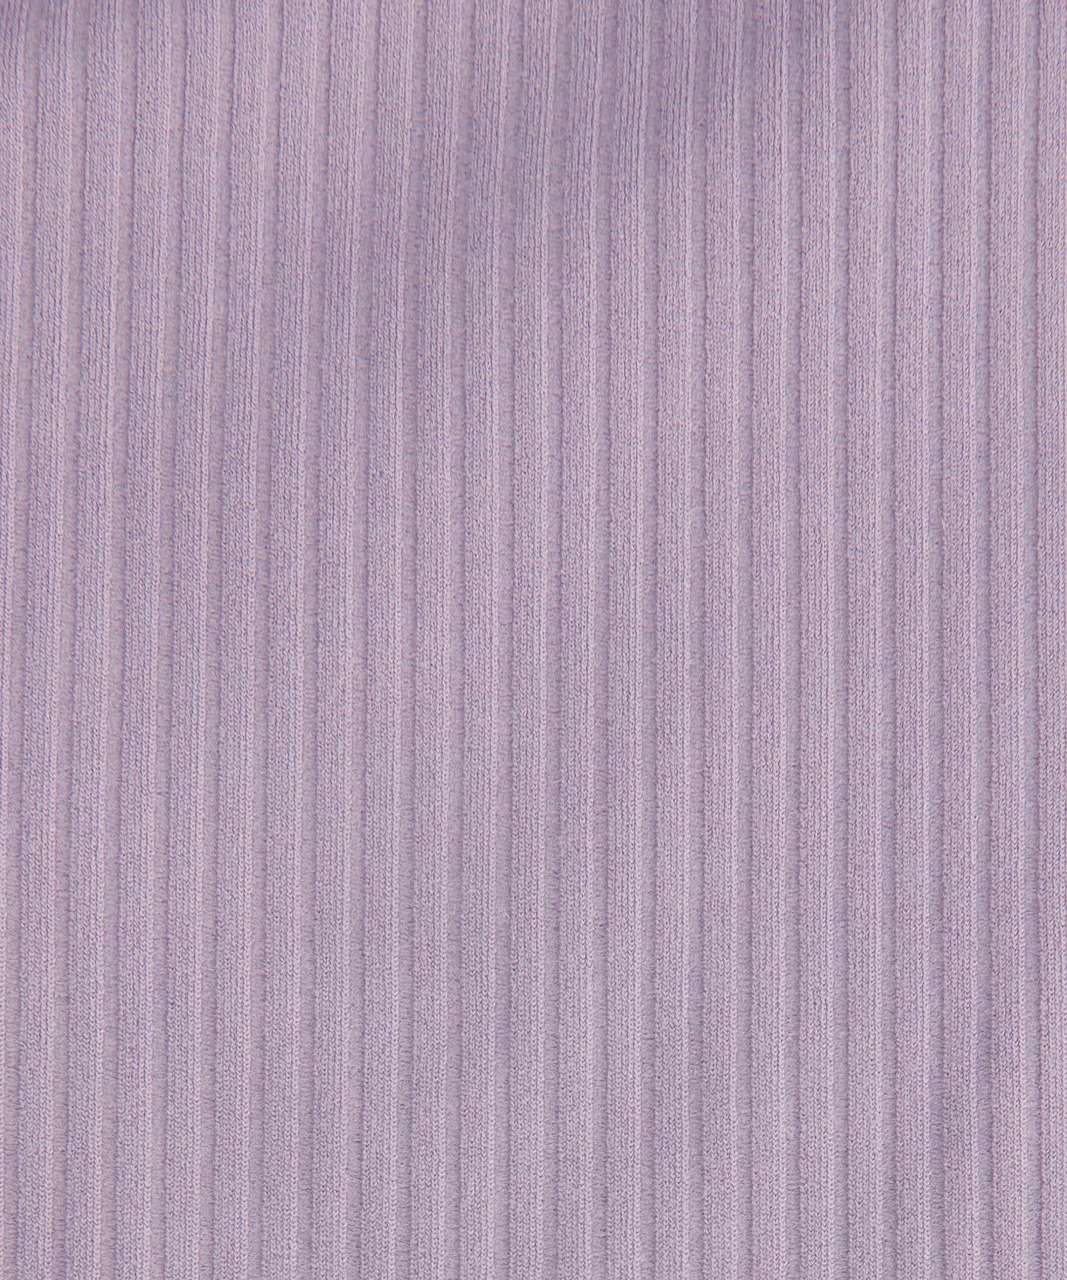 Lululemon Athletica violet logo violet brickwall, Lululemon